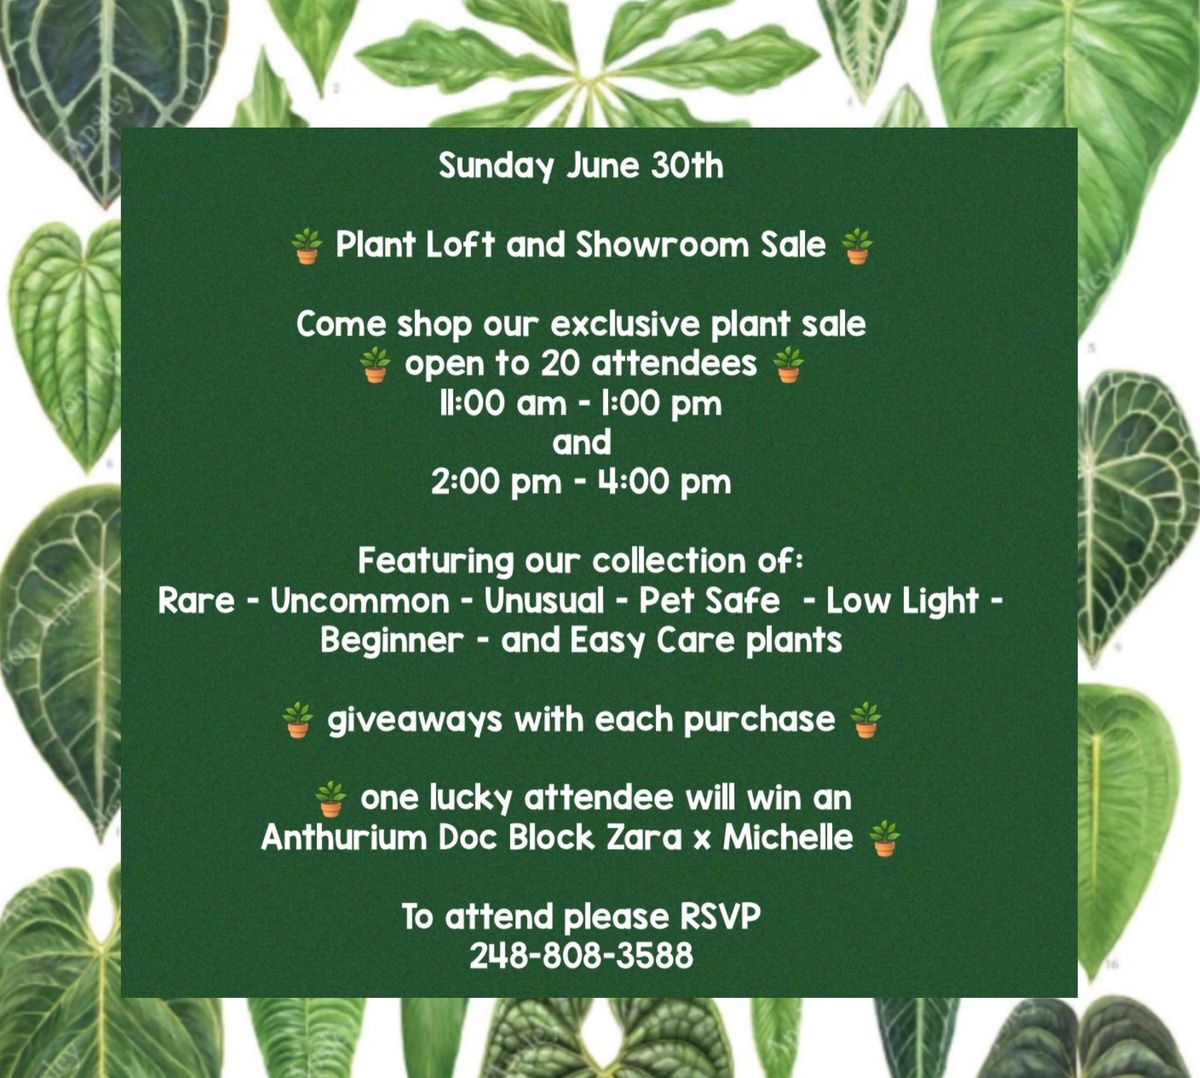 Plant Loft and Showroom Sale